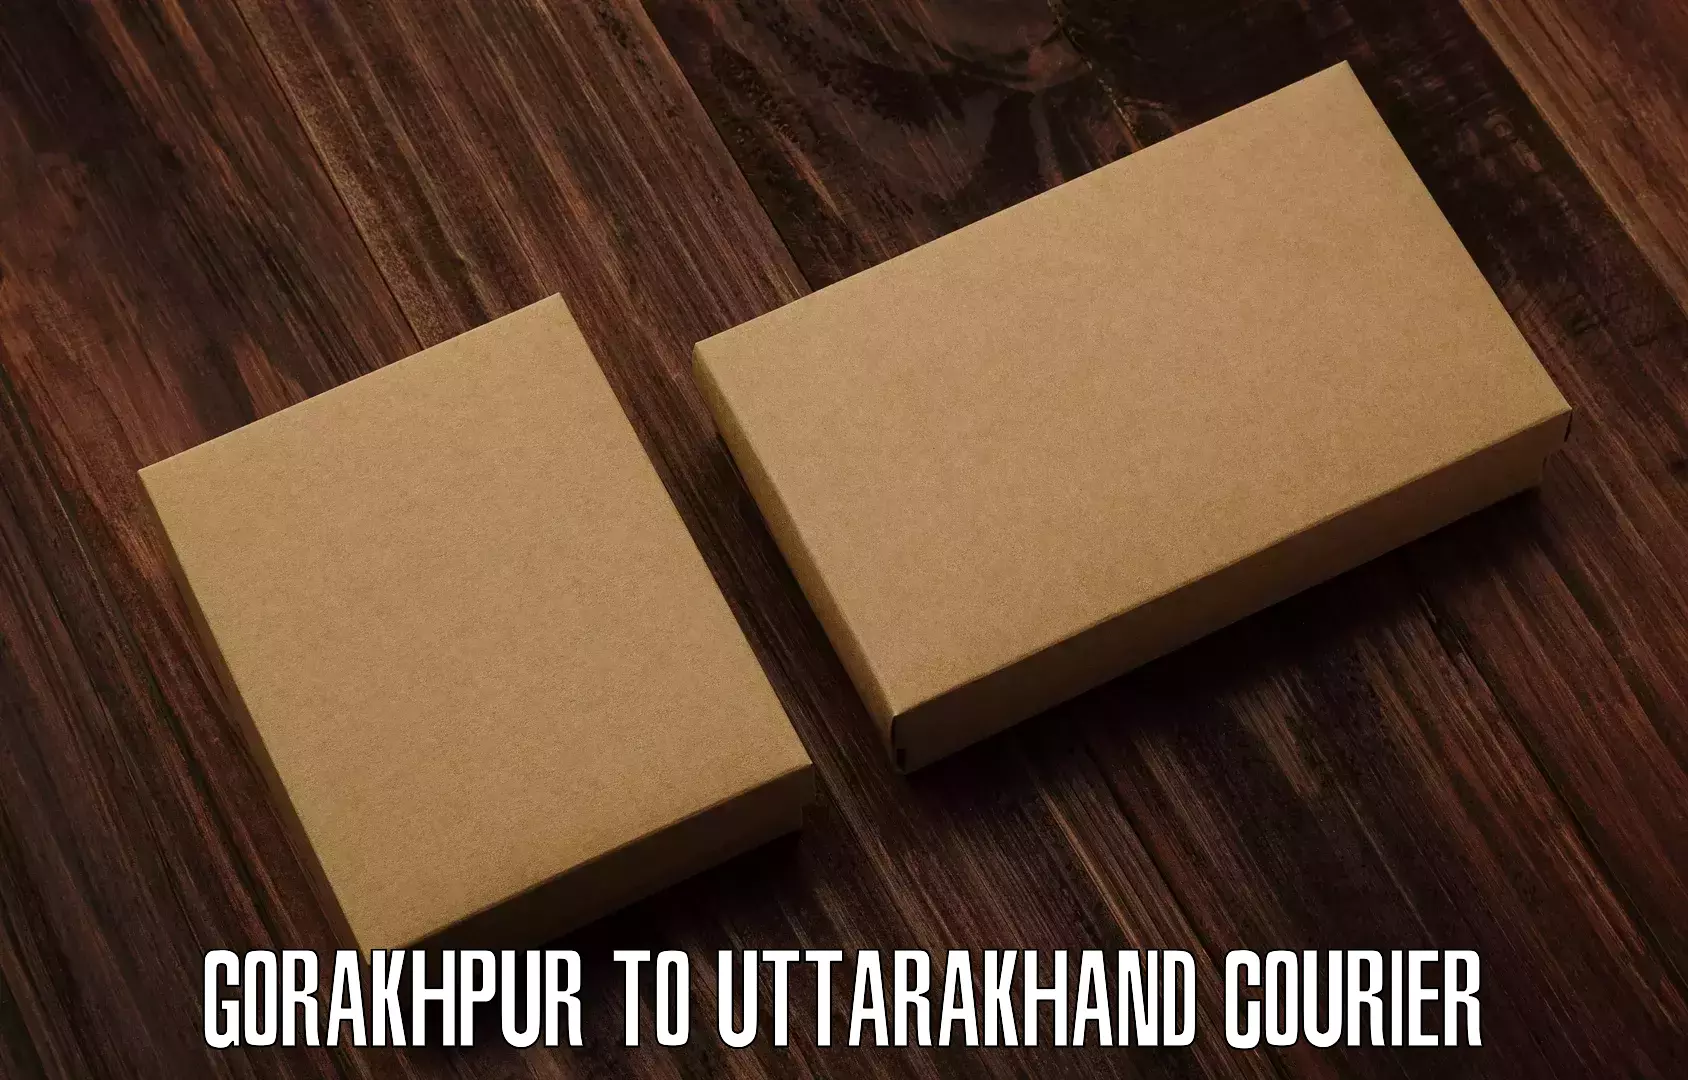 Reliable delivery network Gorakhpur to Uttarakhand